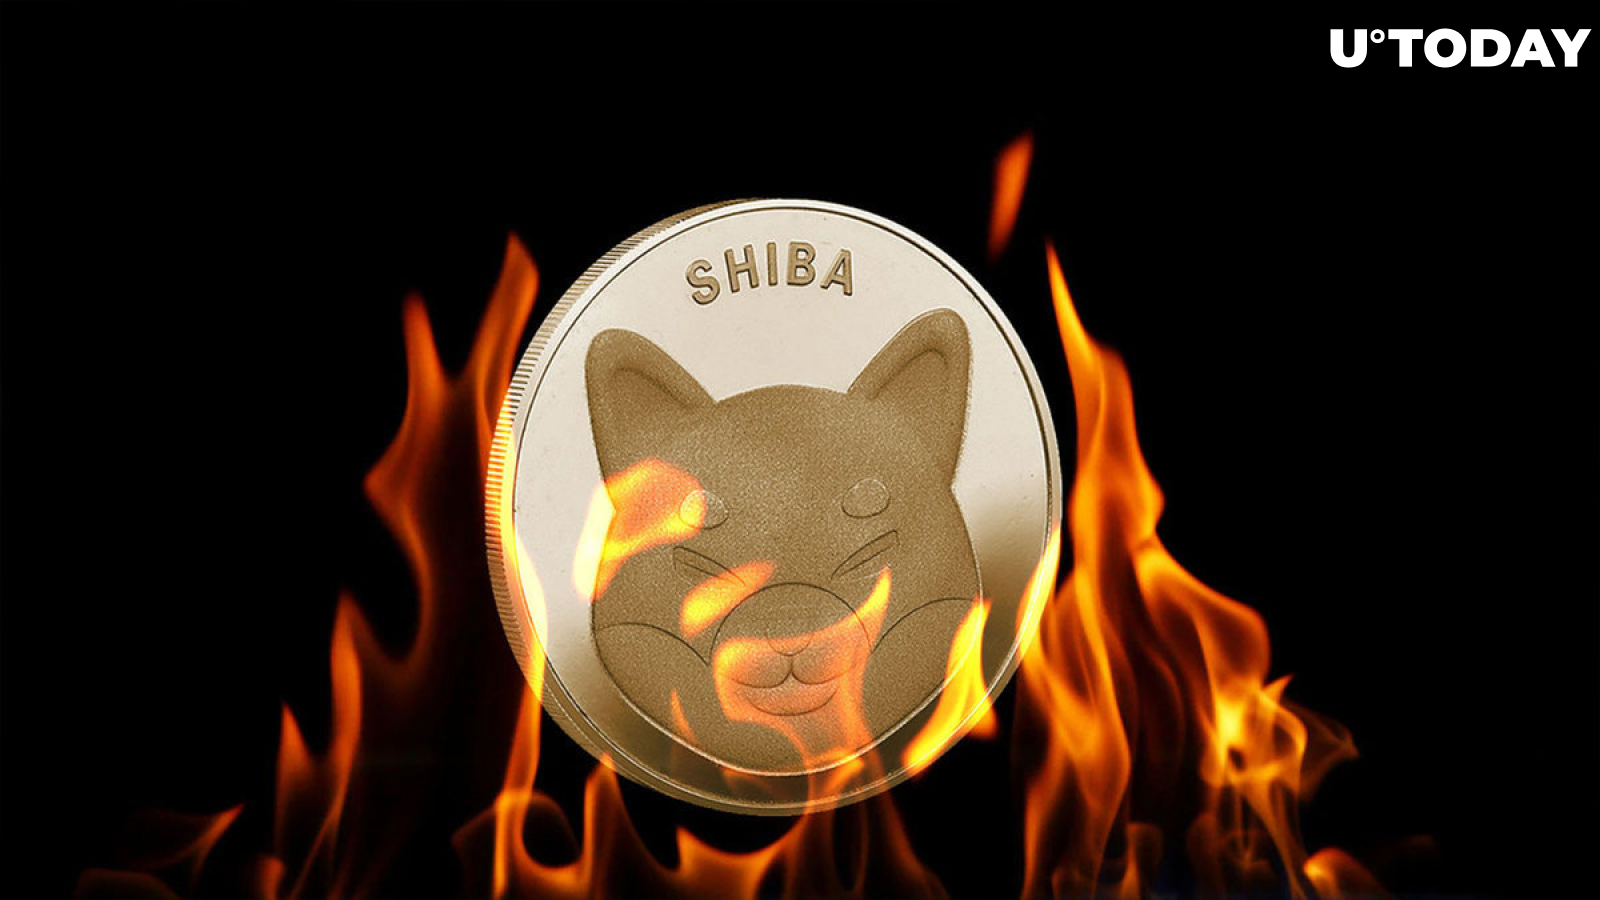 Shiba Inu (SHIB) 2 Billion Token Burn Extremely Suspicious, Here's Why